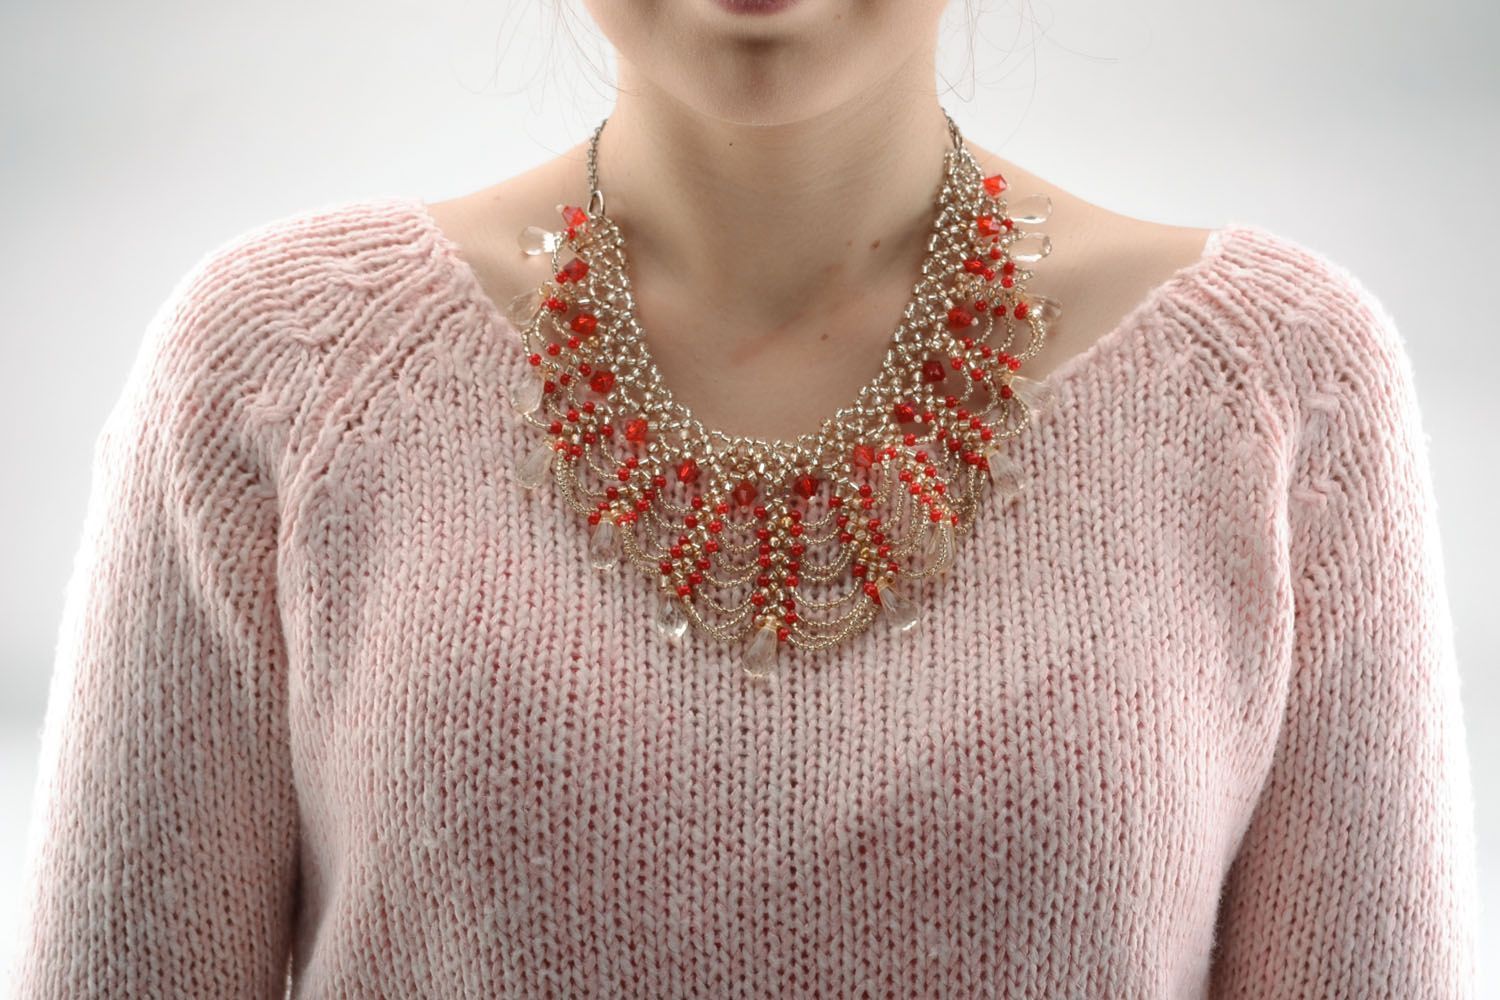 Homemade multi-row necklace photo 5